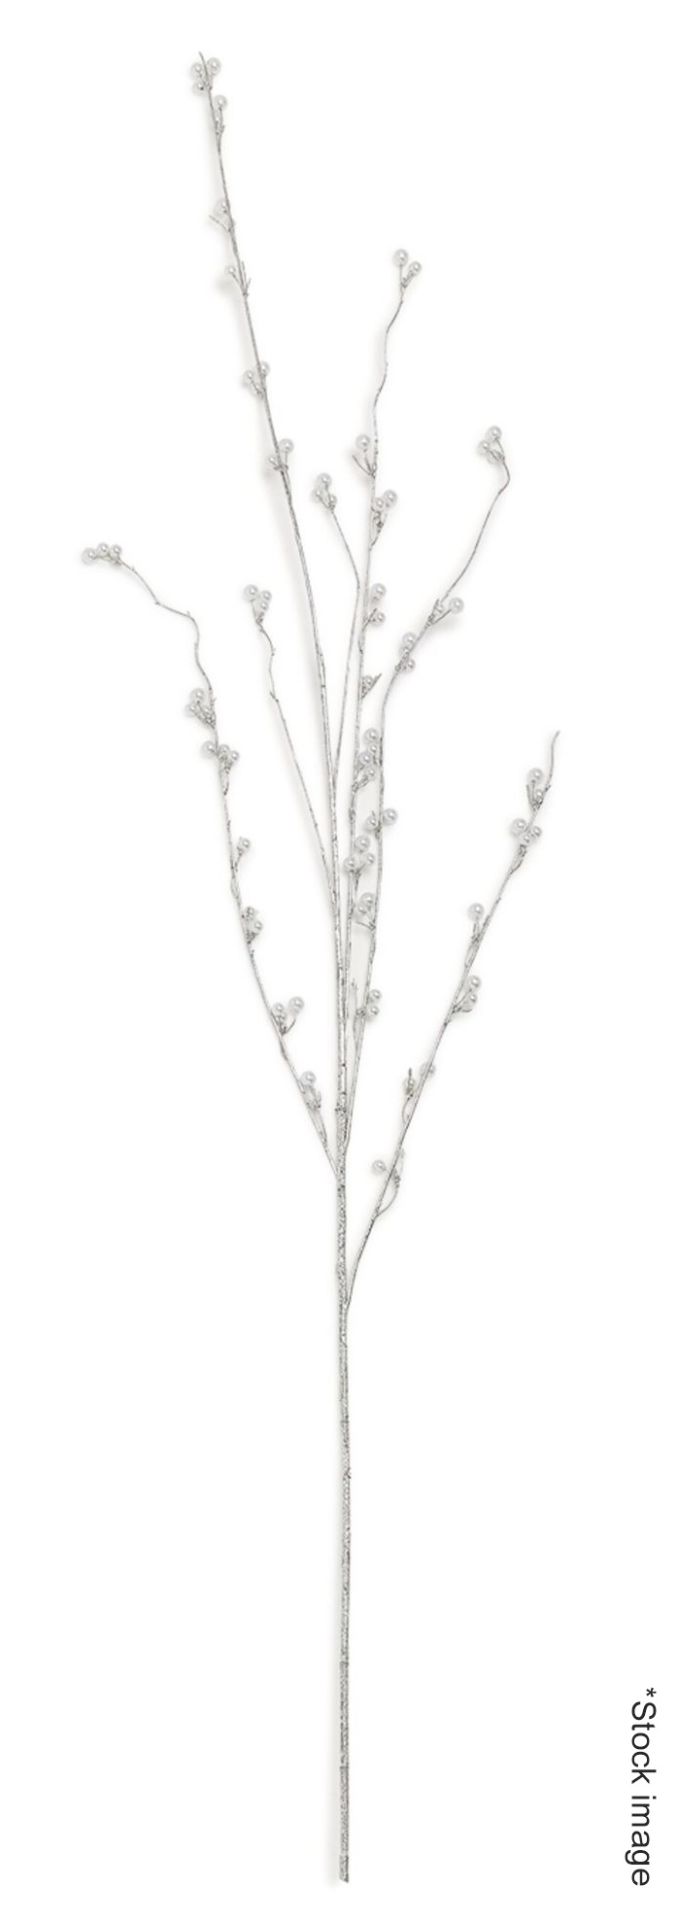 3 x HARRODS OF LONDON Decorative Glitter Branches - Original Price £89.85 - Unused Boxed Stock - - Image 2 of 4